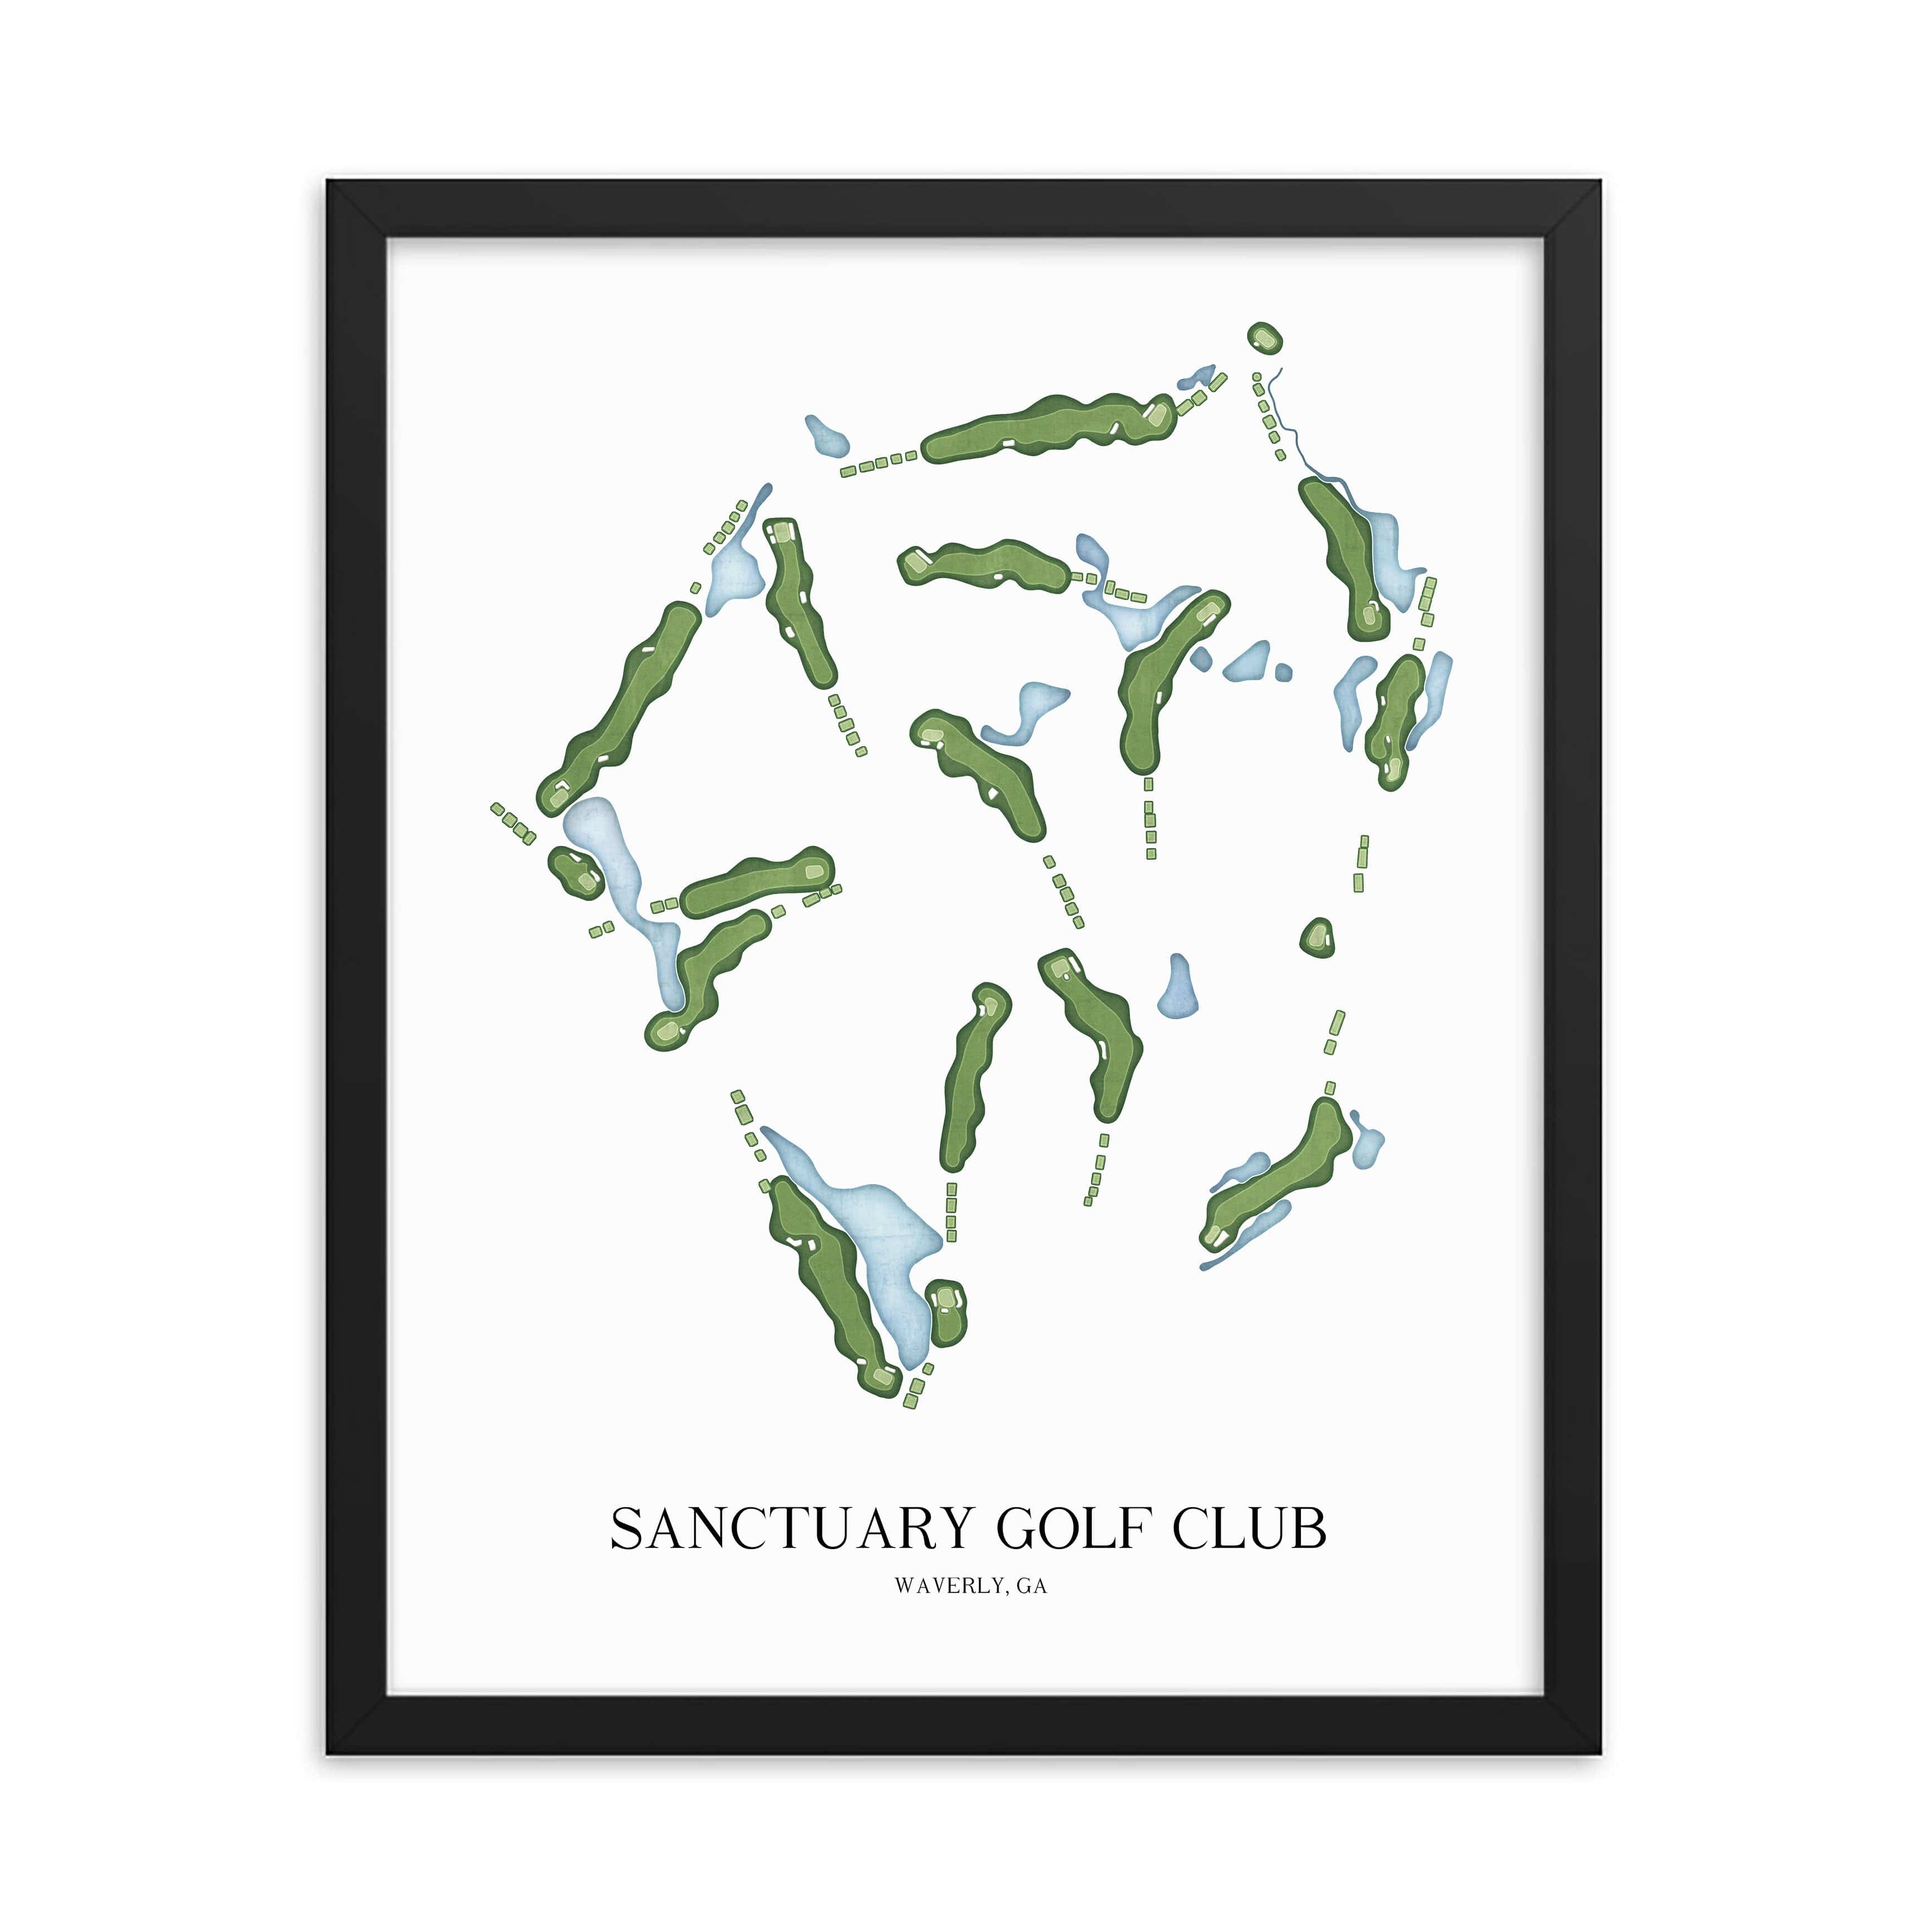 The 19th Hole Golf Shop - Golf Course Prints -  Sanctuary Golf Club Golf Course Map